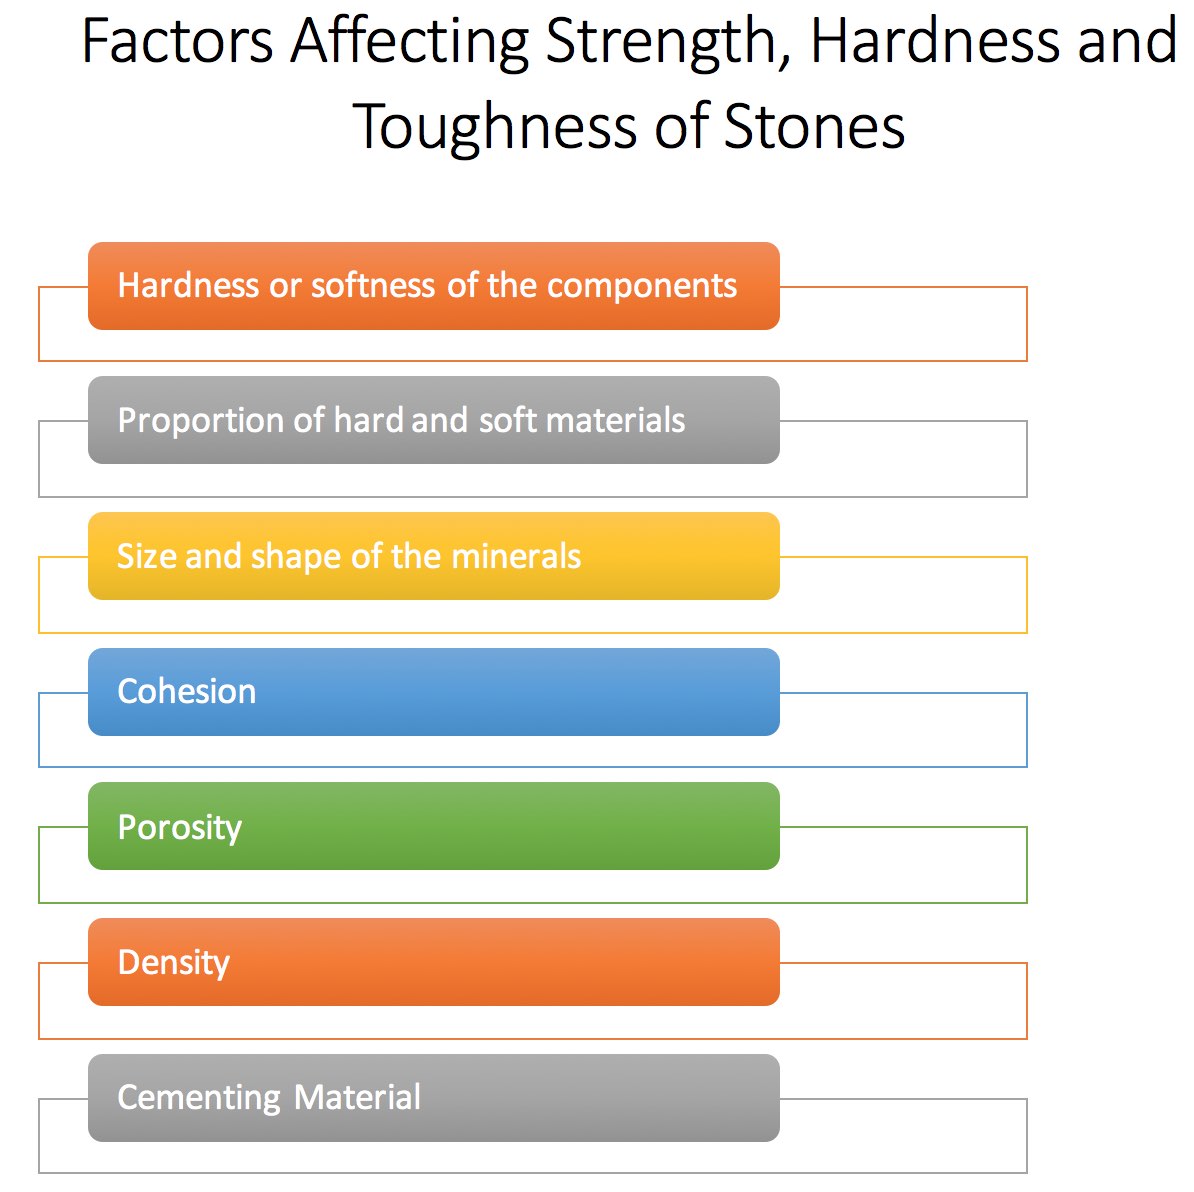 Factors Affecting Strength of Stones